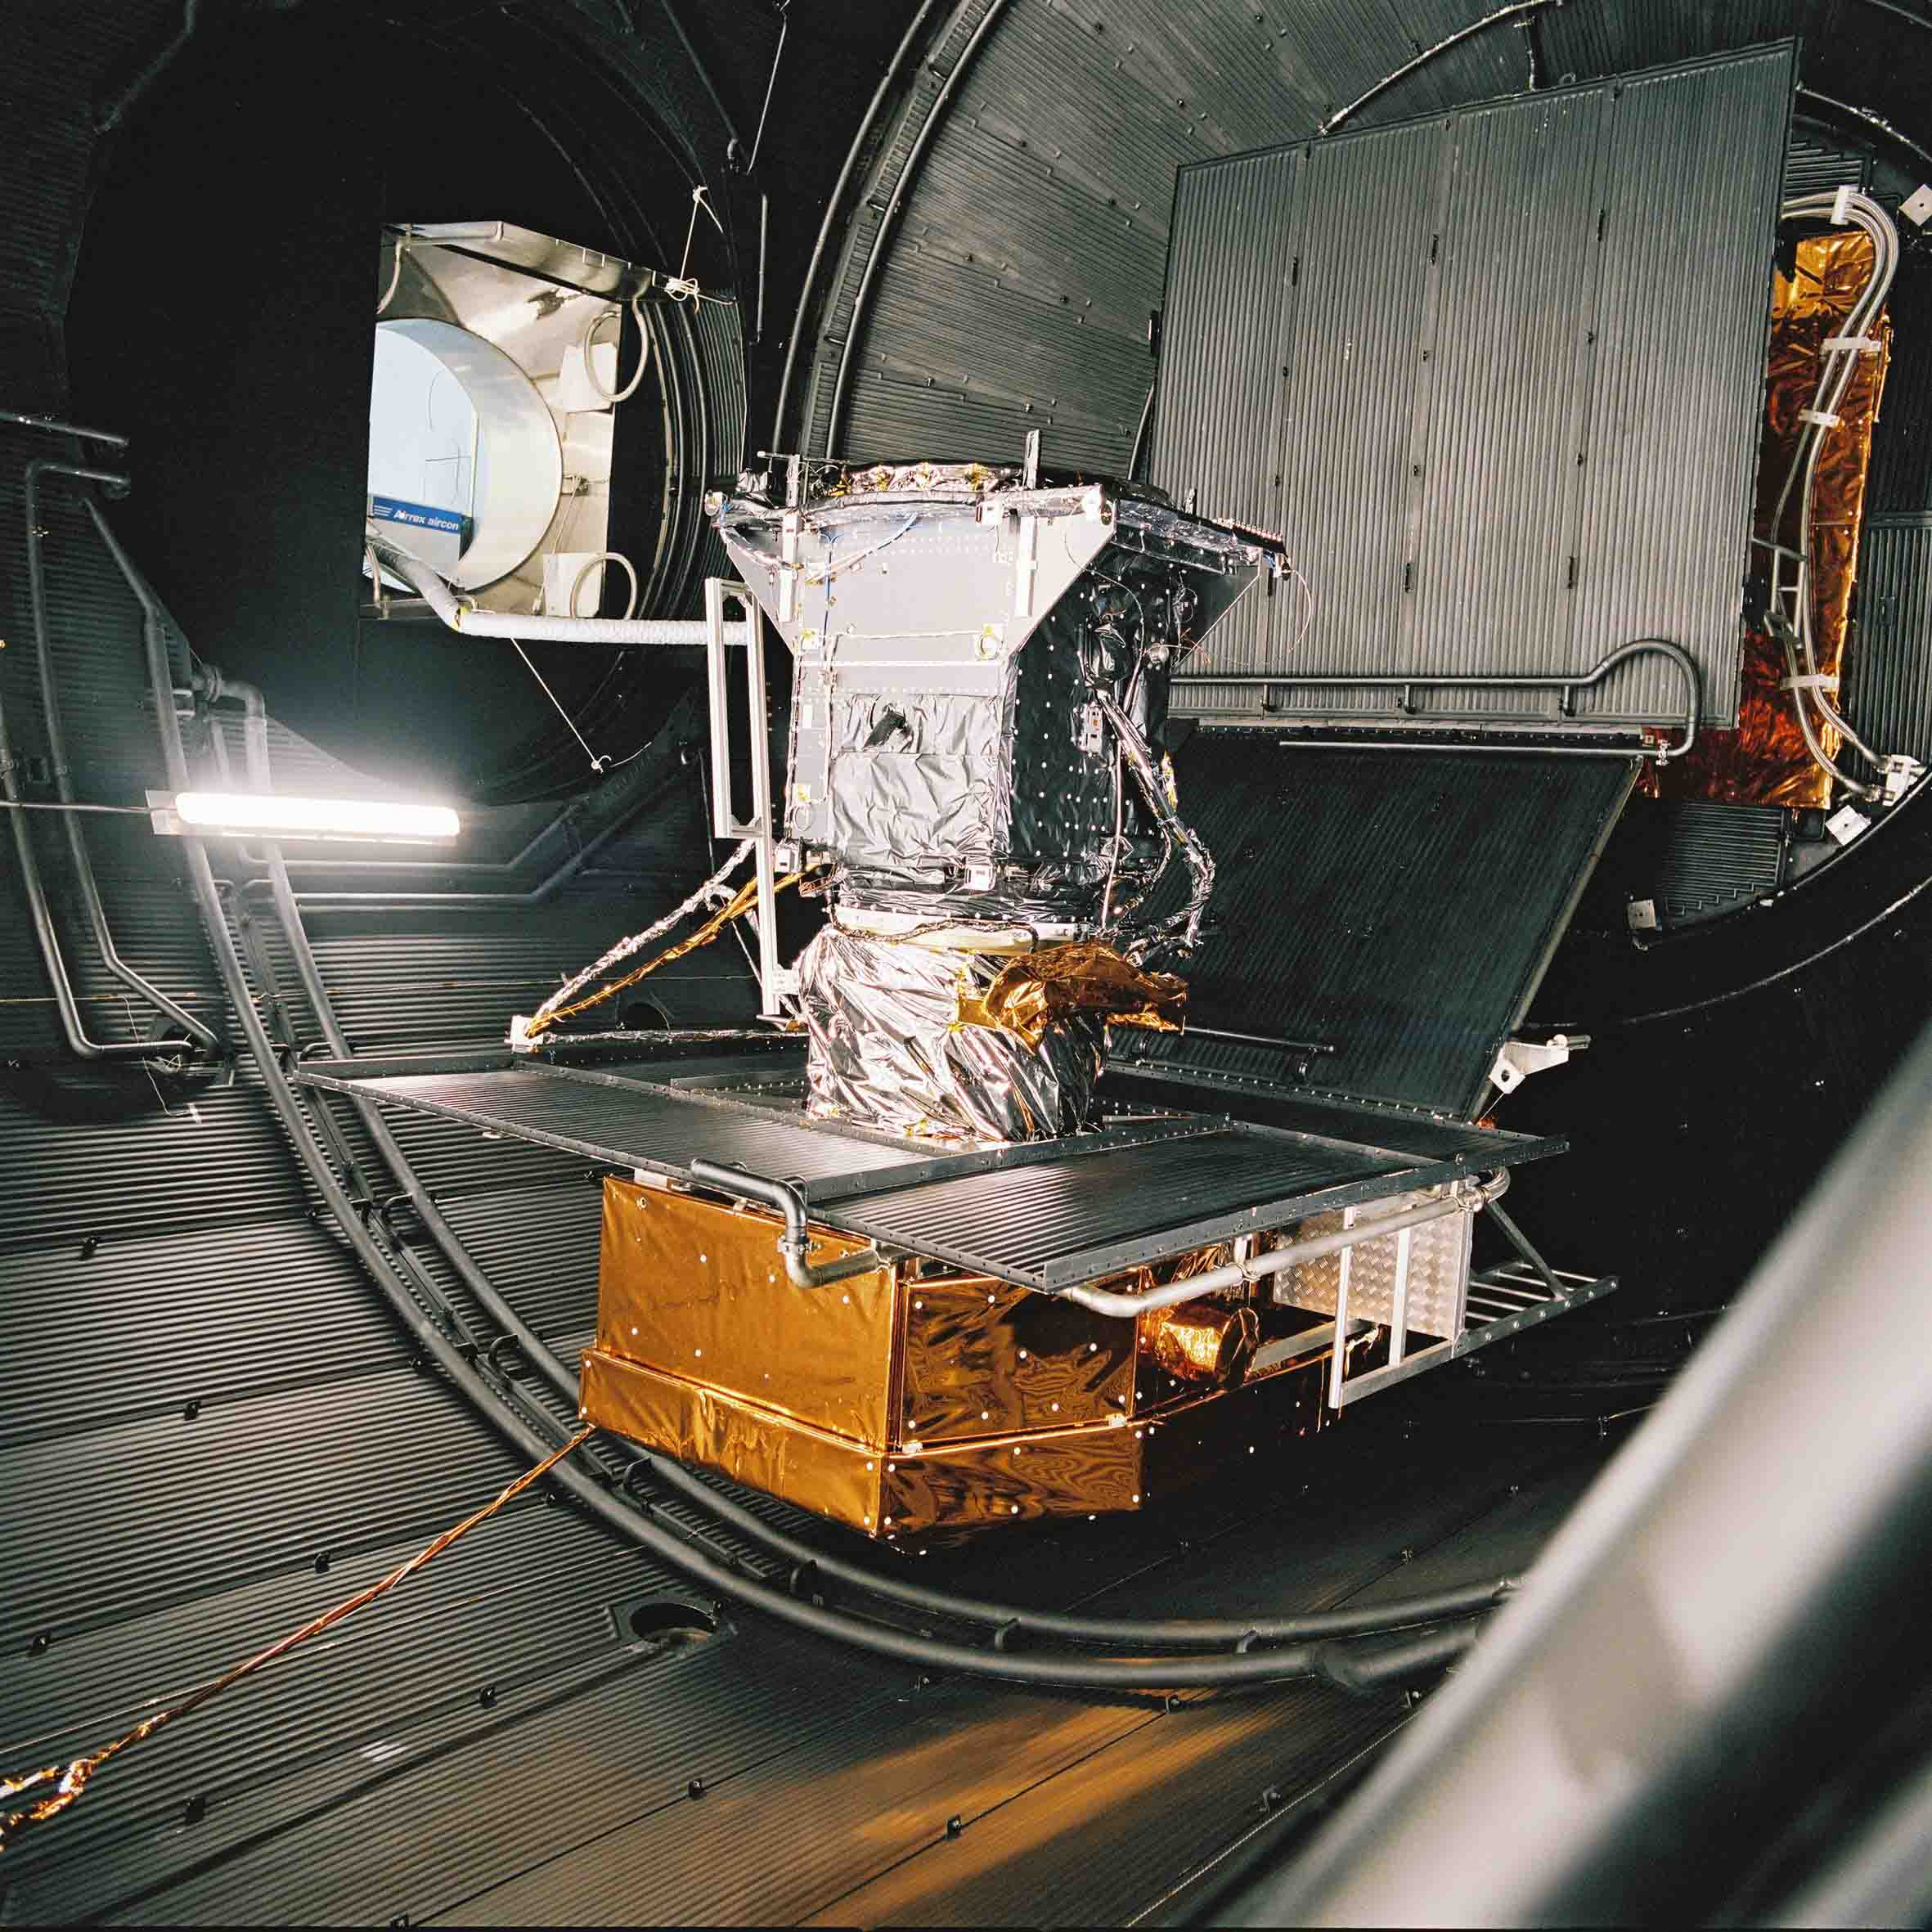 GIOVE-A Orbital Maneuver Makes Way for Galileo Satellites